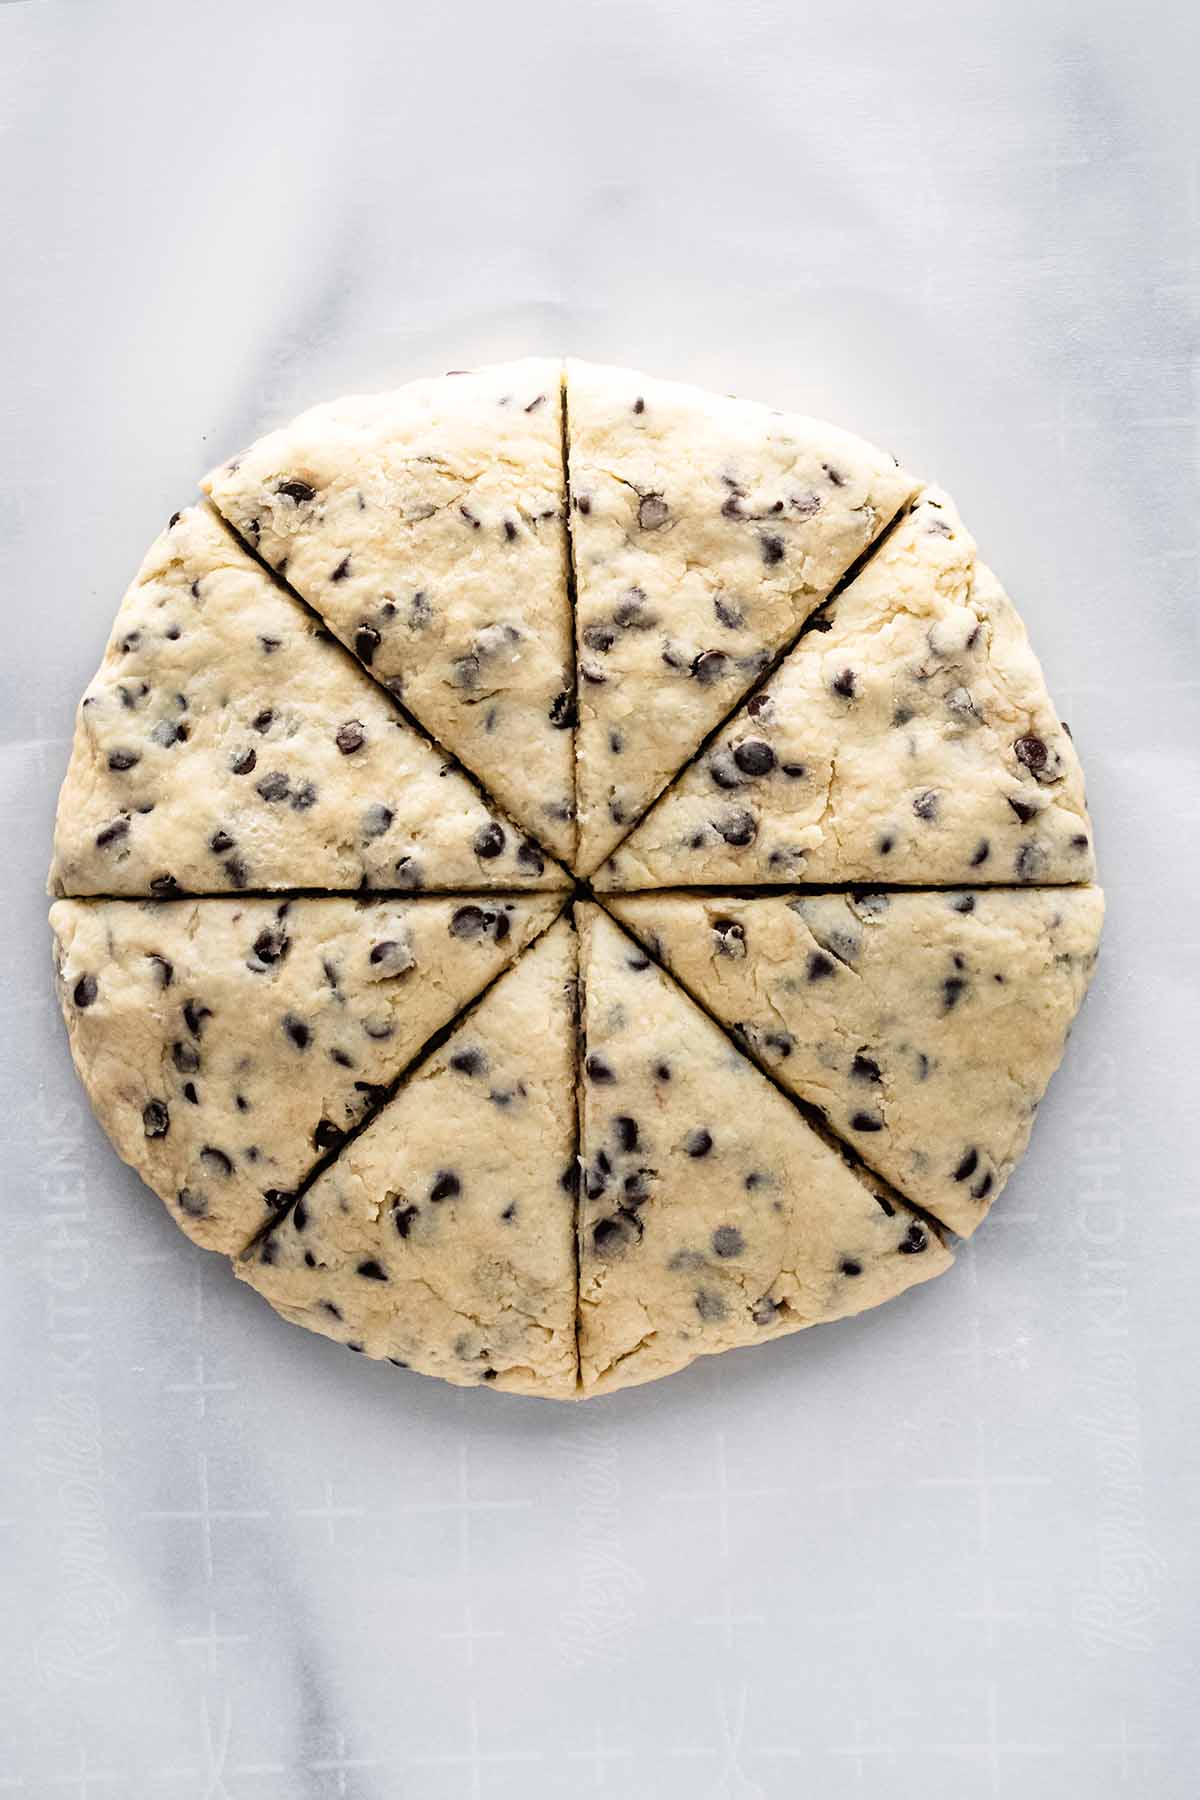 Overhead view of scone dough cut into 8 triangles